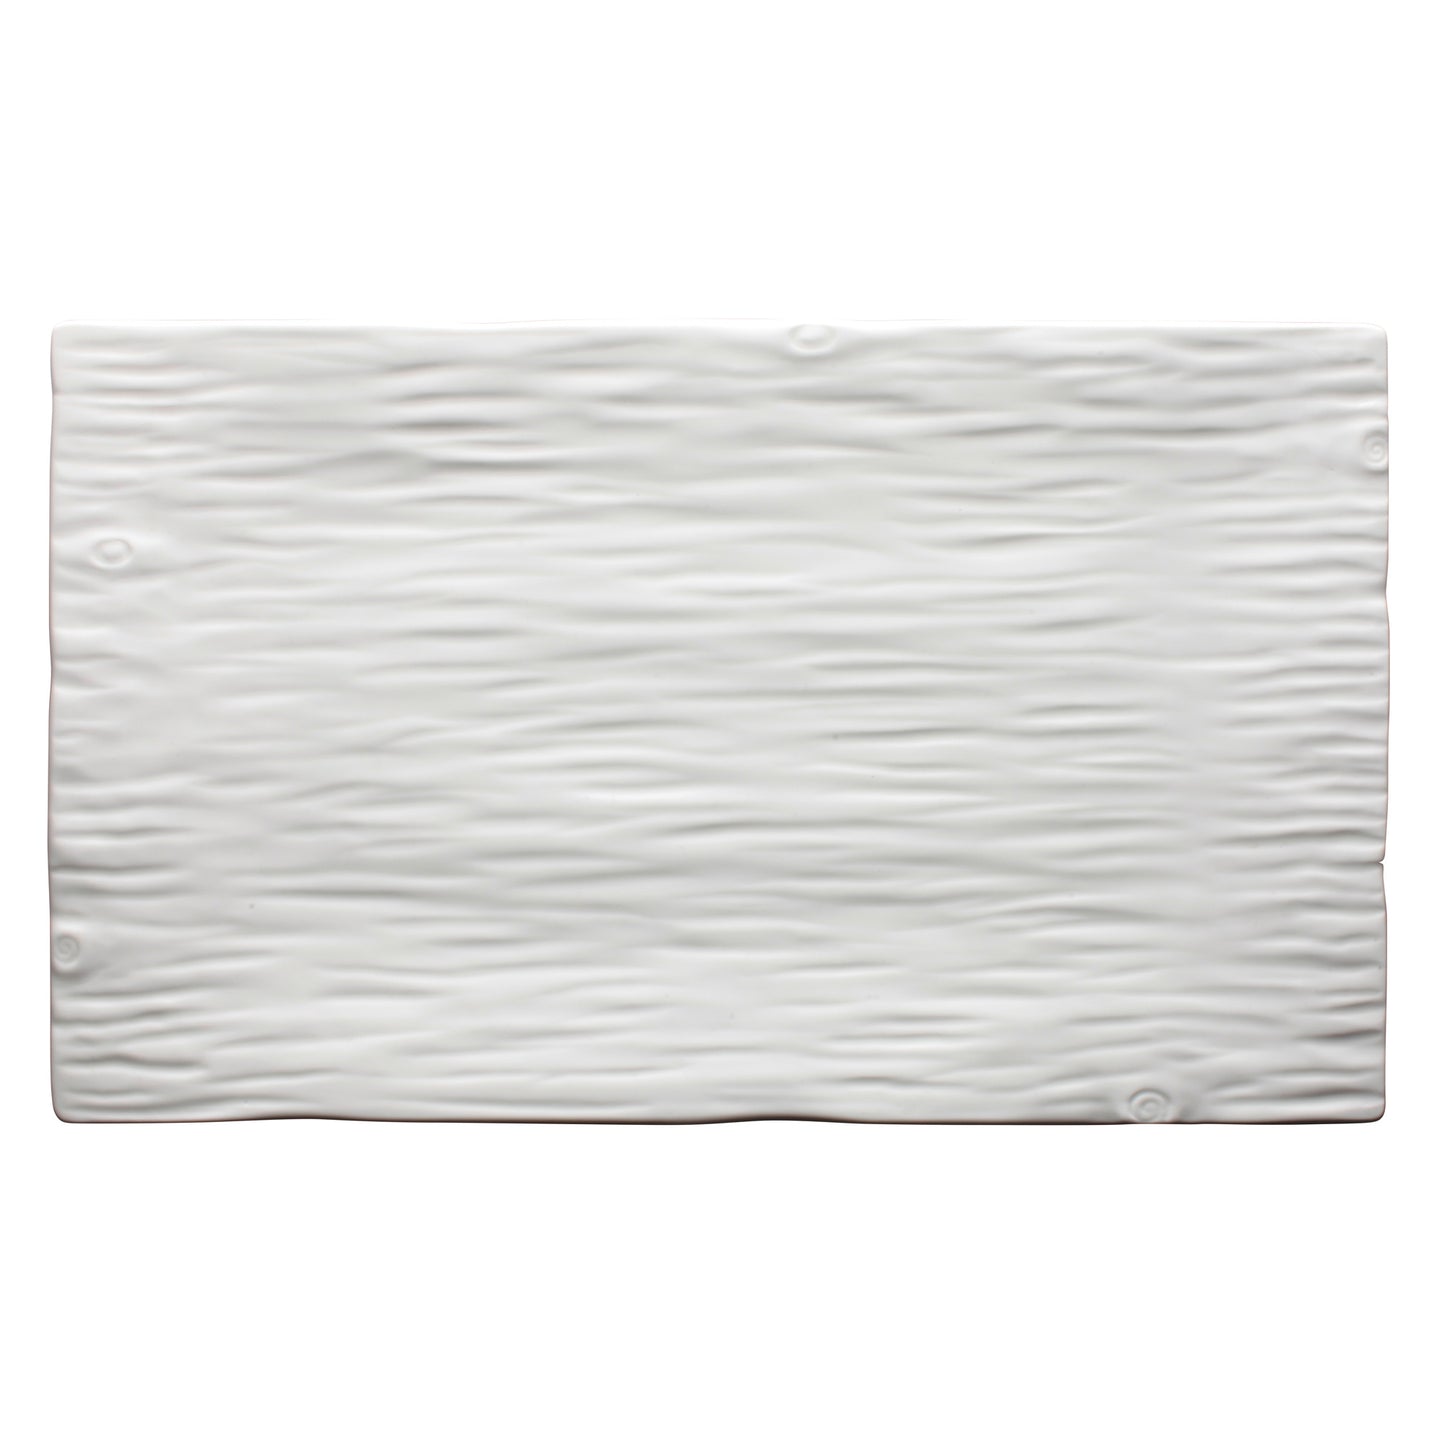 WDP002-204 - Dalmata Porcelain Rectangular Platter, Creamy White - 15-1/8"